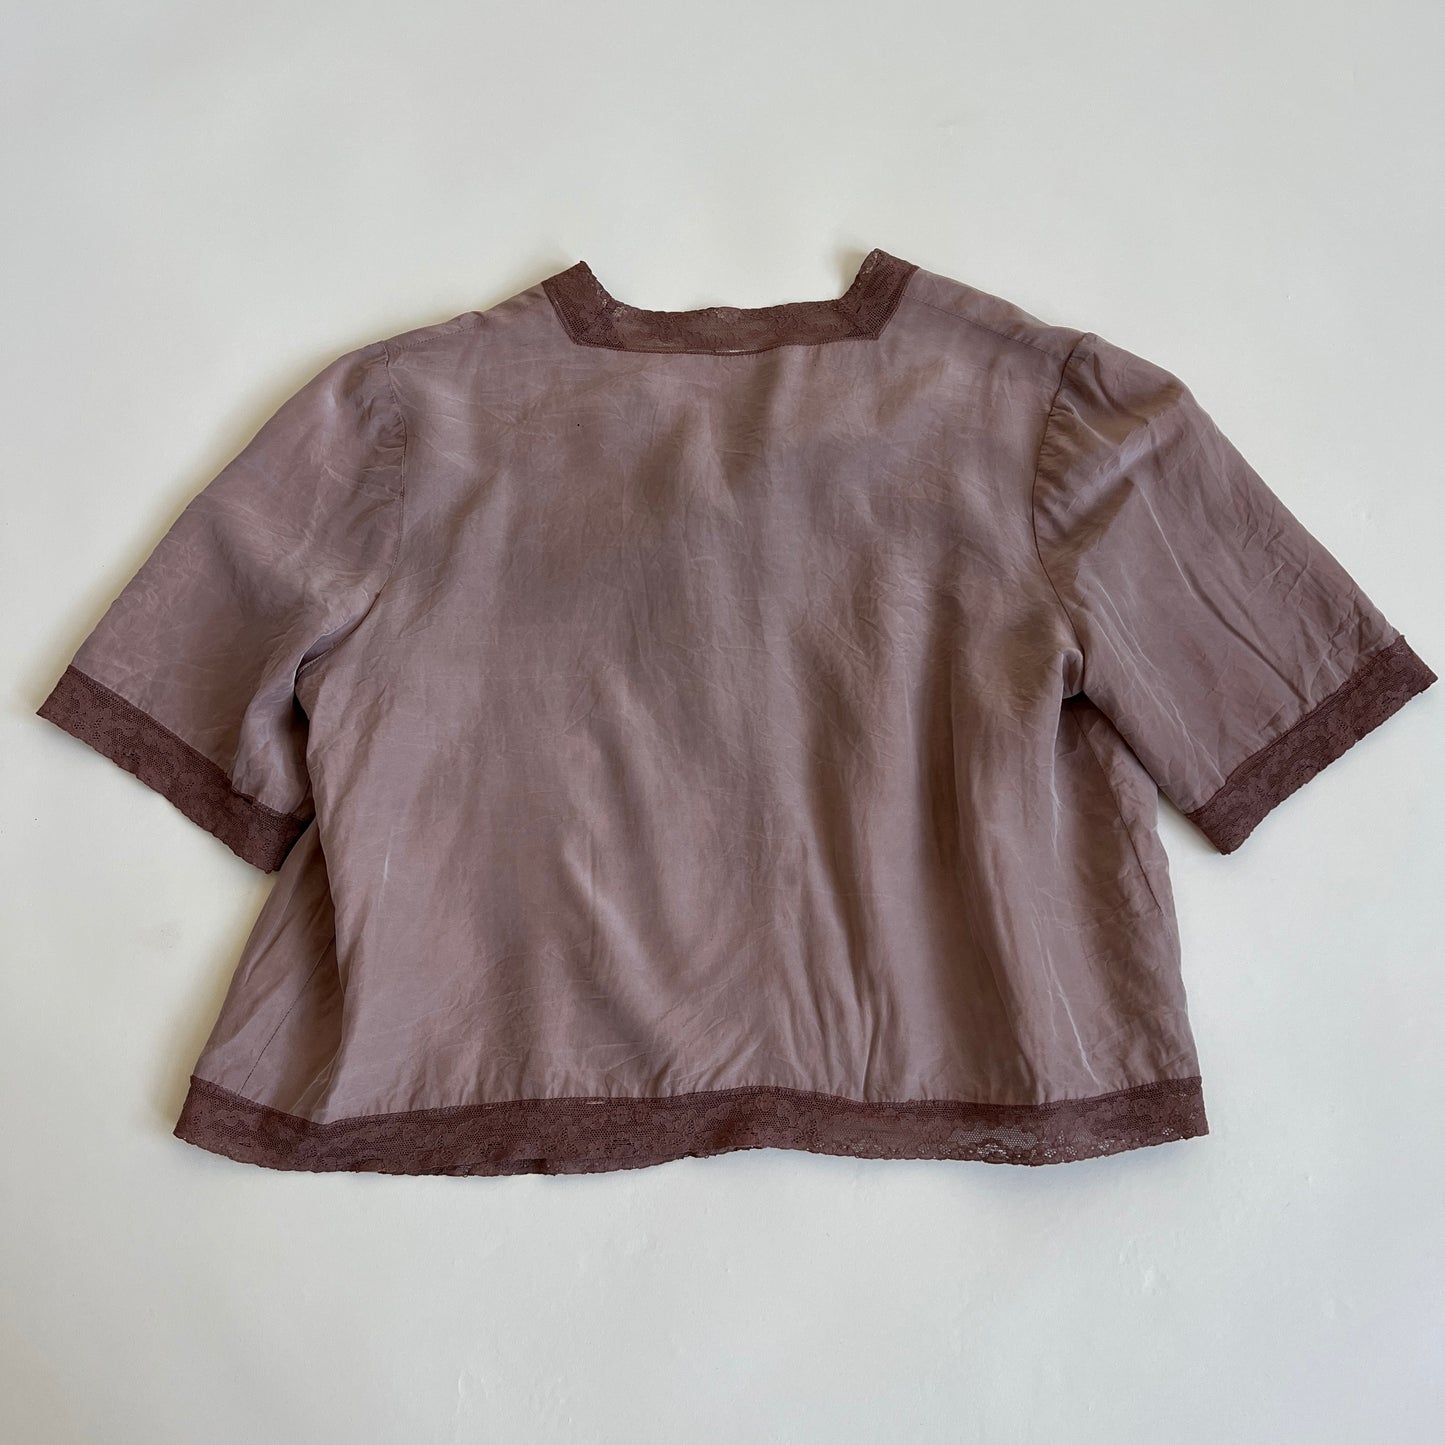 Hand dyed brown vintage bed jacket (L)